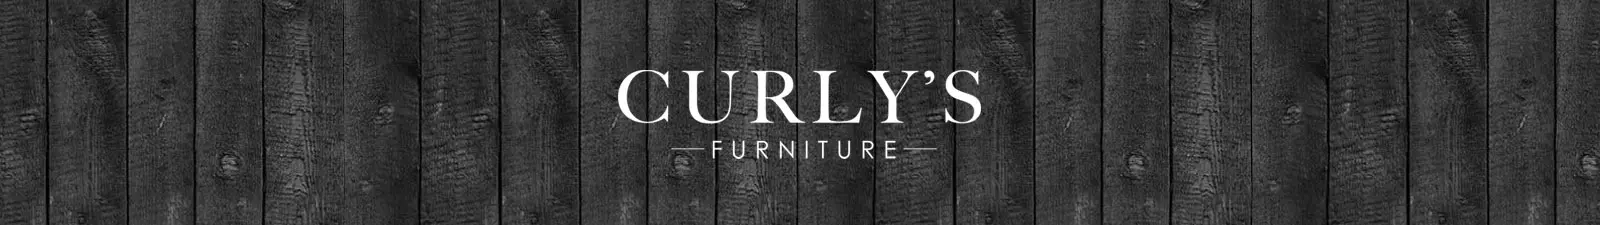 Curly's Furniture